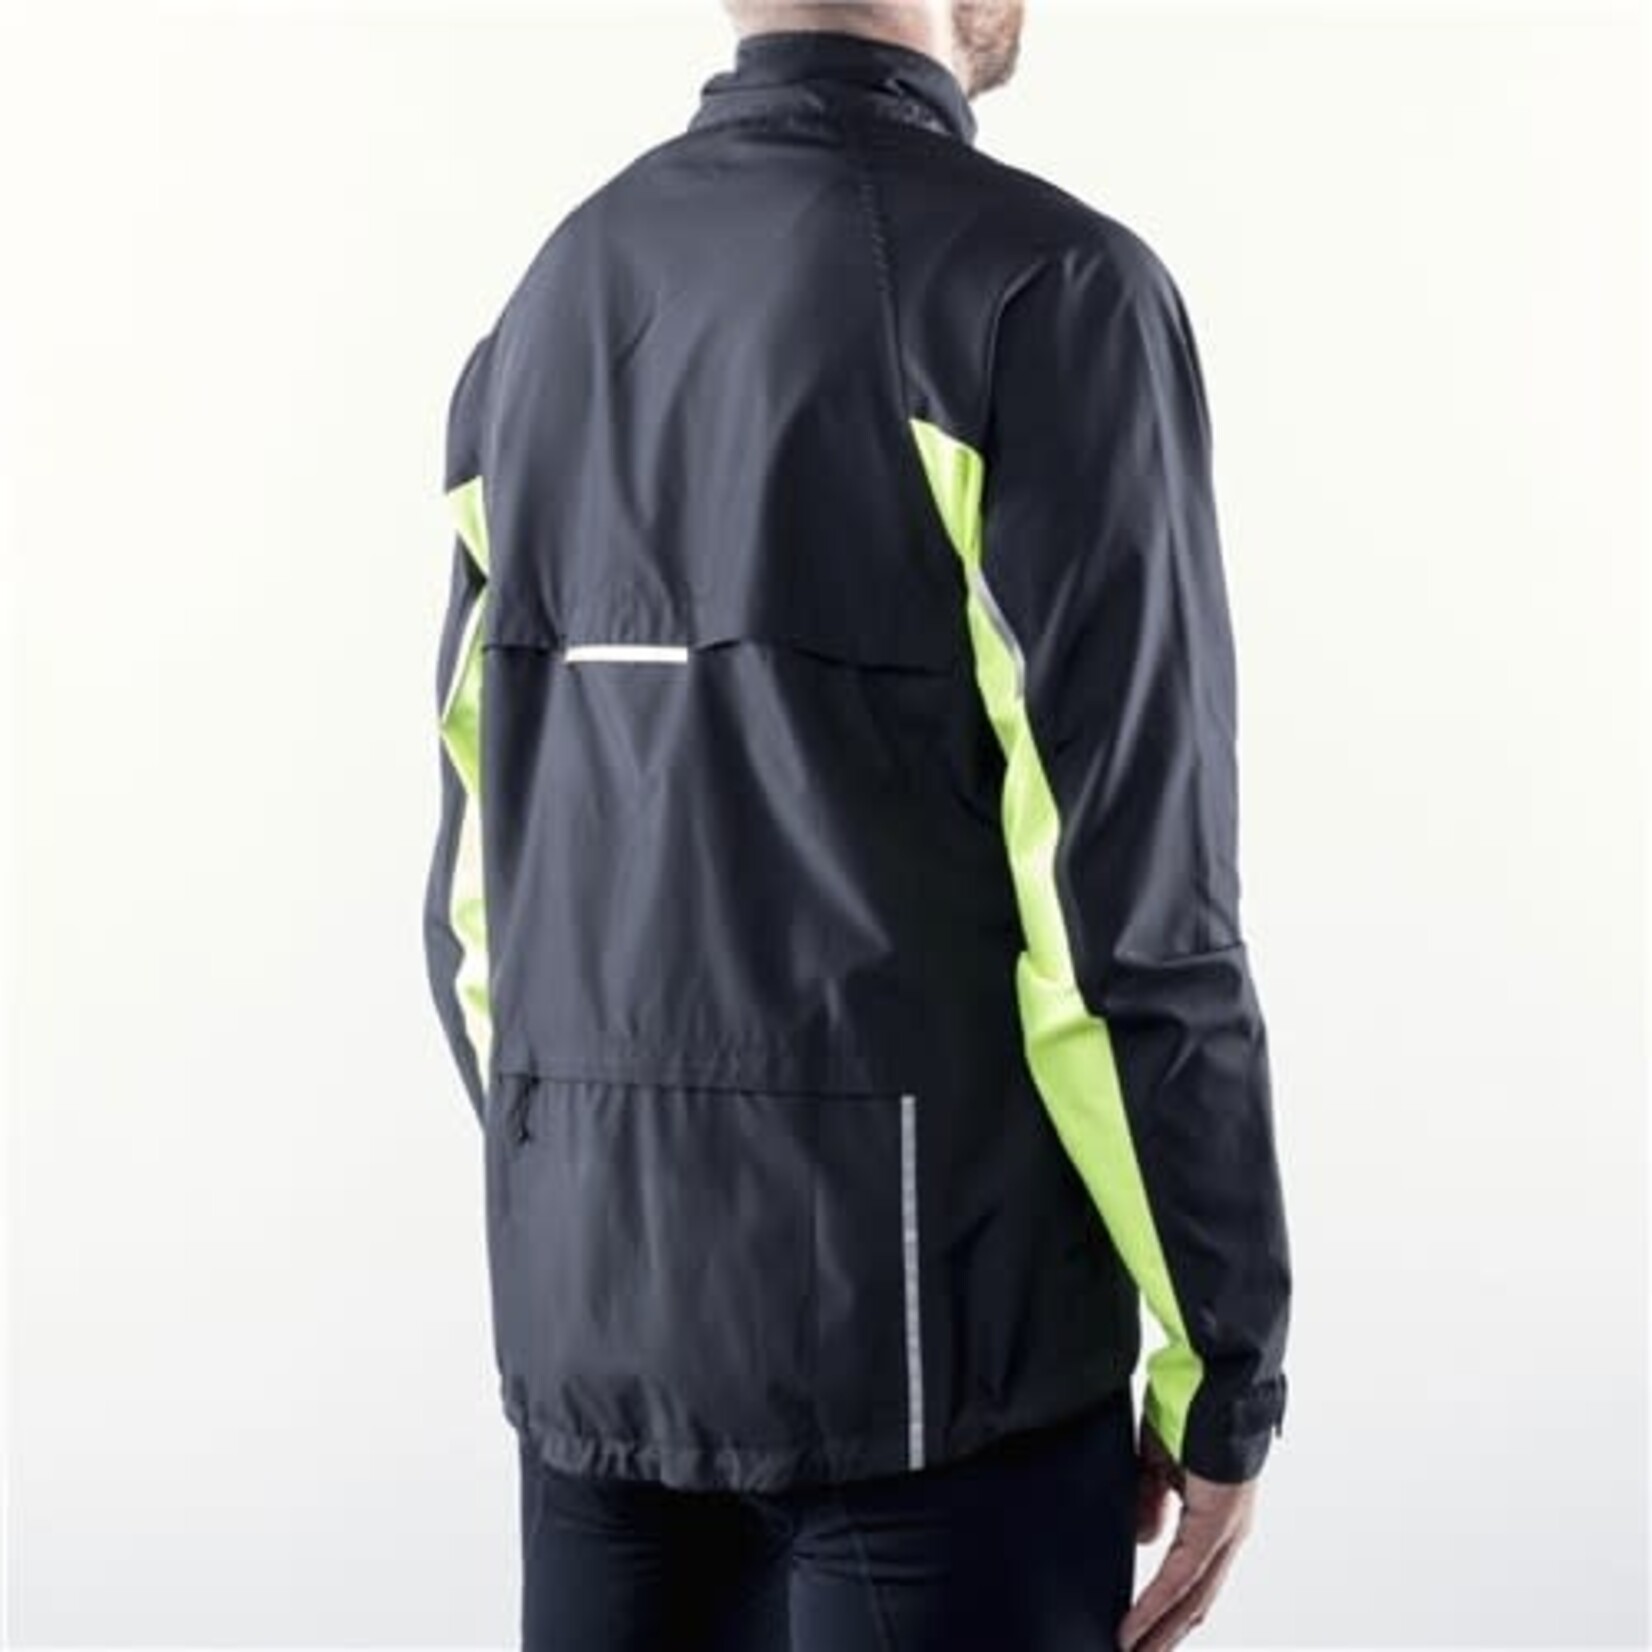 Bellwether Bellwether Men's Cycling EXO+ Windproof Jacket - Velocity Jacket - Black